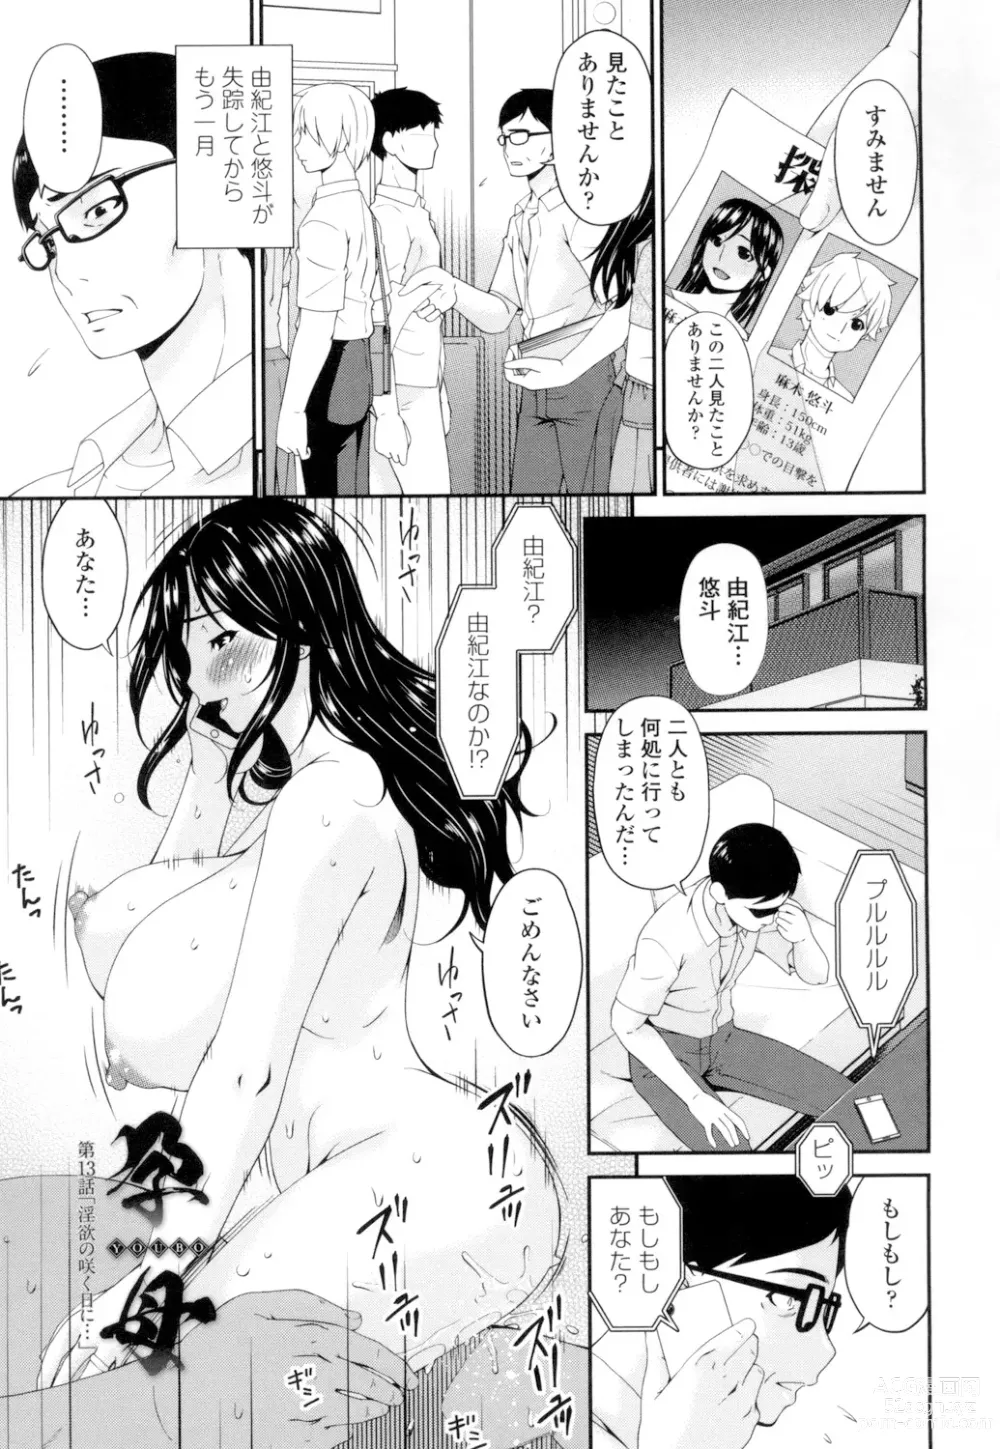 Page 222 of manga Youbo